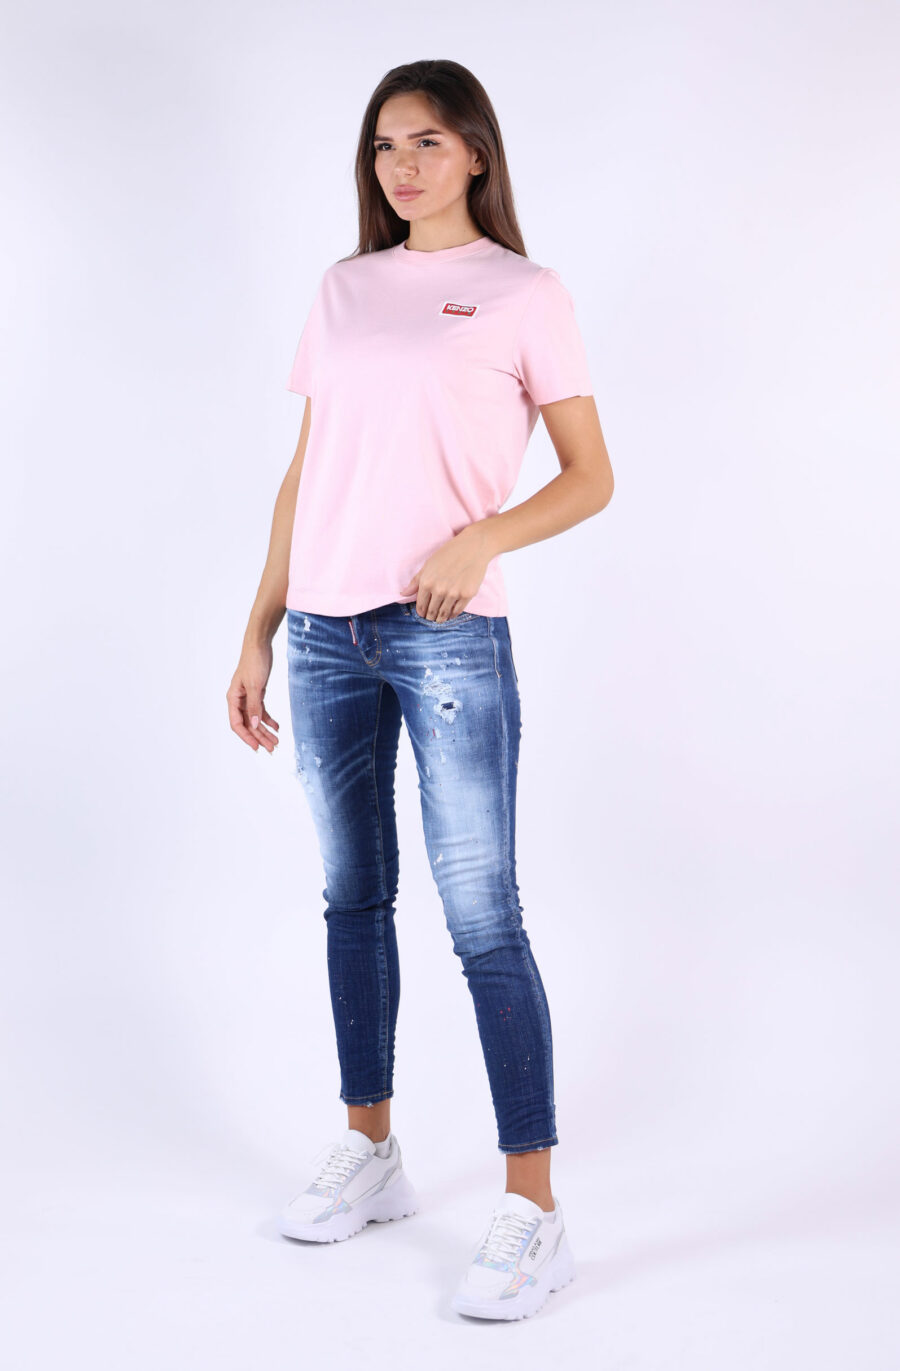 Camiseta rosa "oversize" con logo "kenzo paris" - 361223054662201904